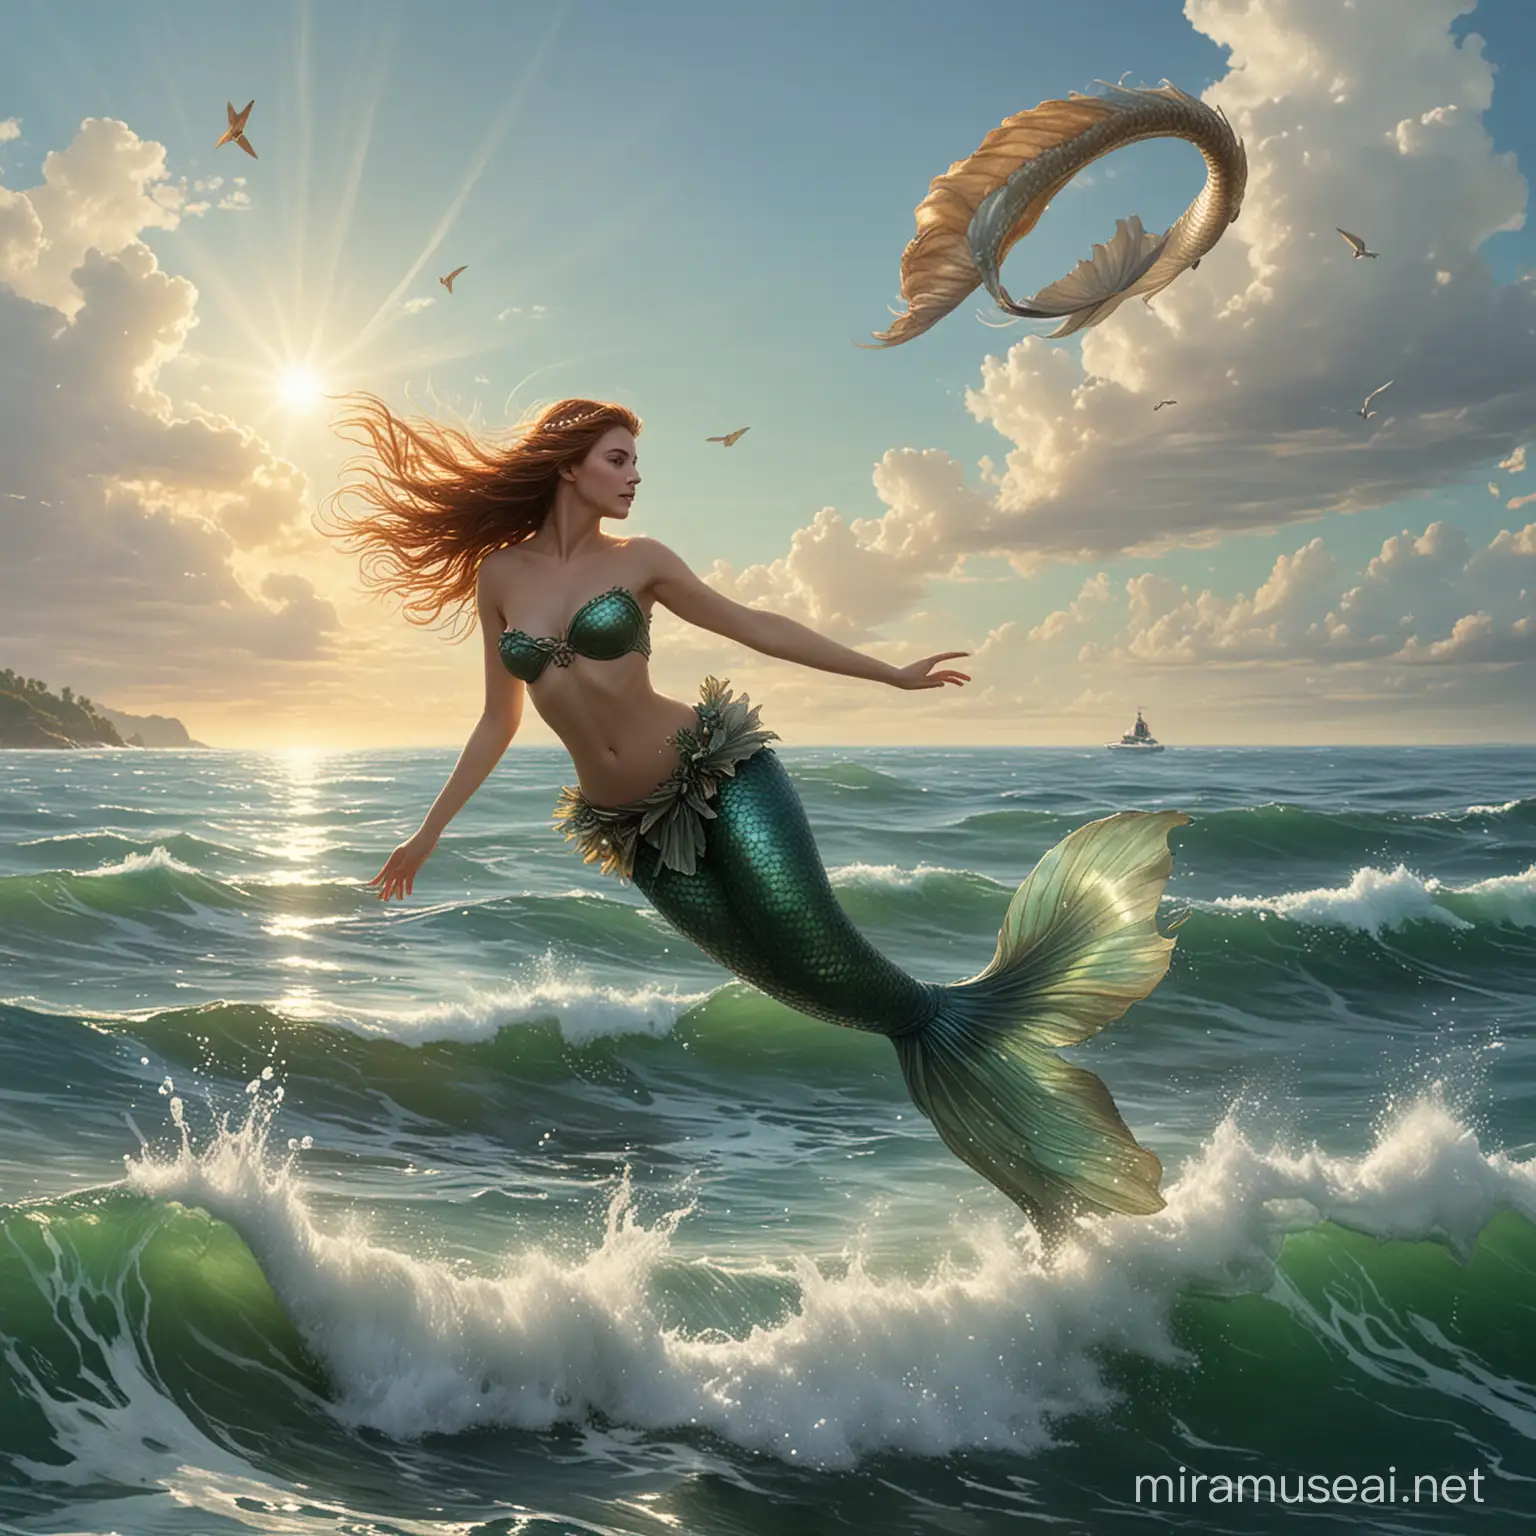 Graceful Air Nymph Soaring Over Ocean Waves with Mermaid Greeting